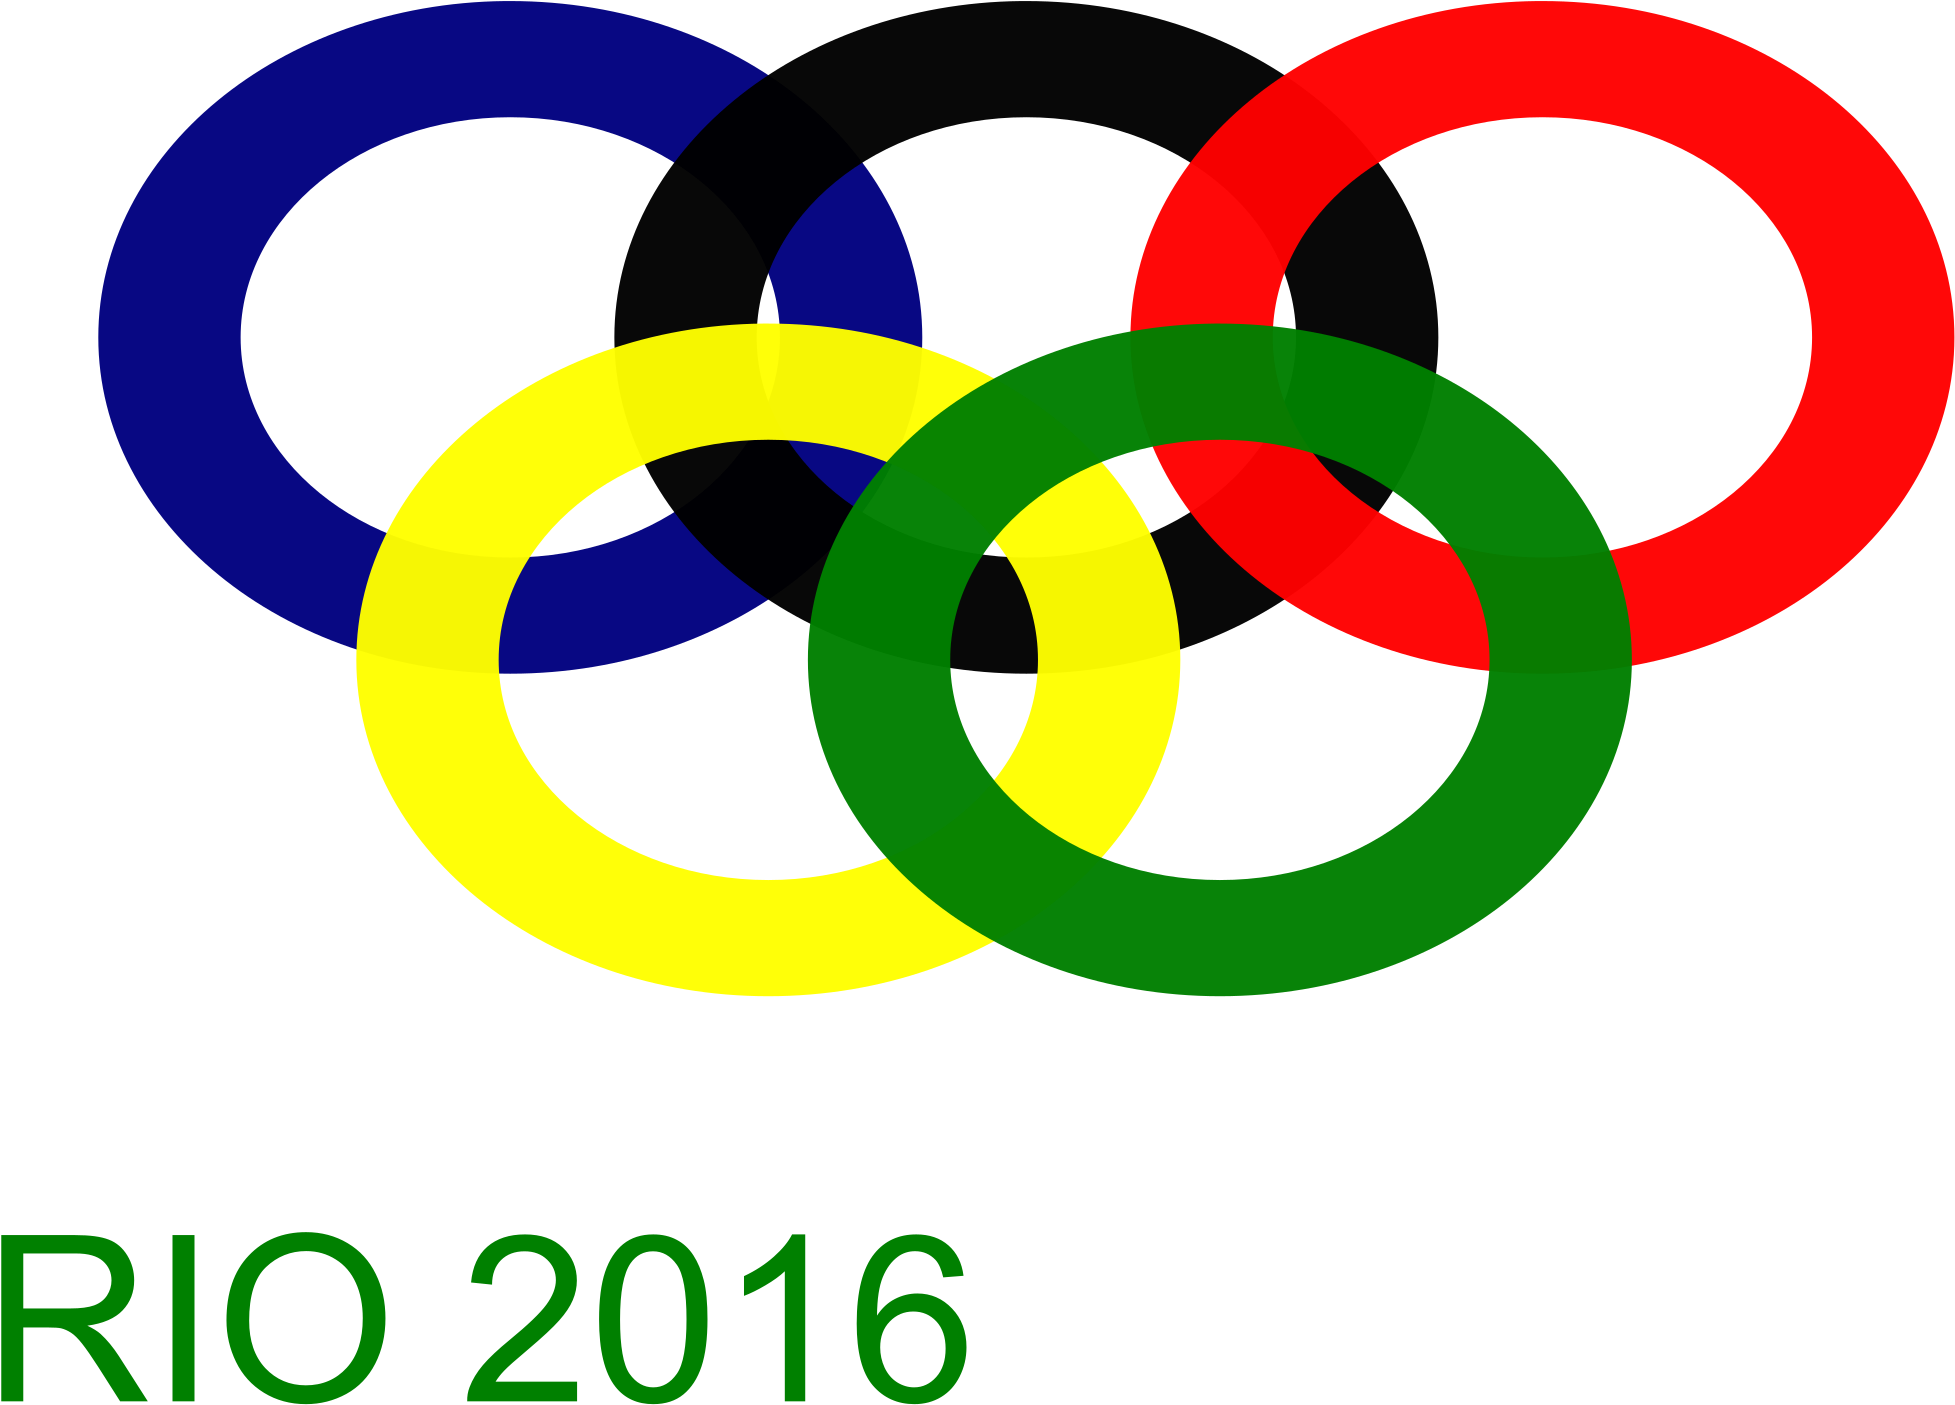 Olimpicos Rio 2016 - Olympic Games Rio 2016 (2400x3394)